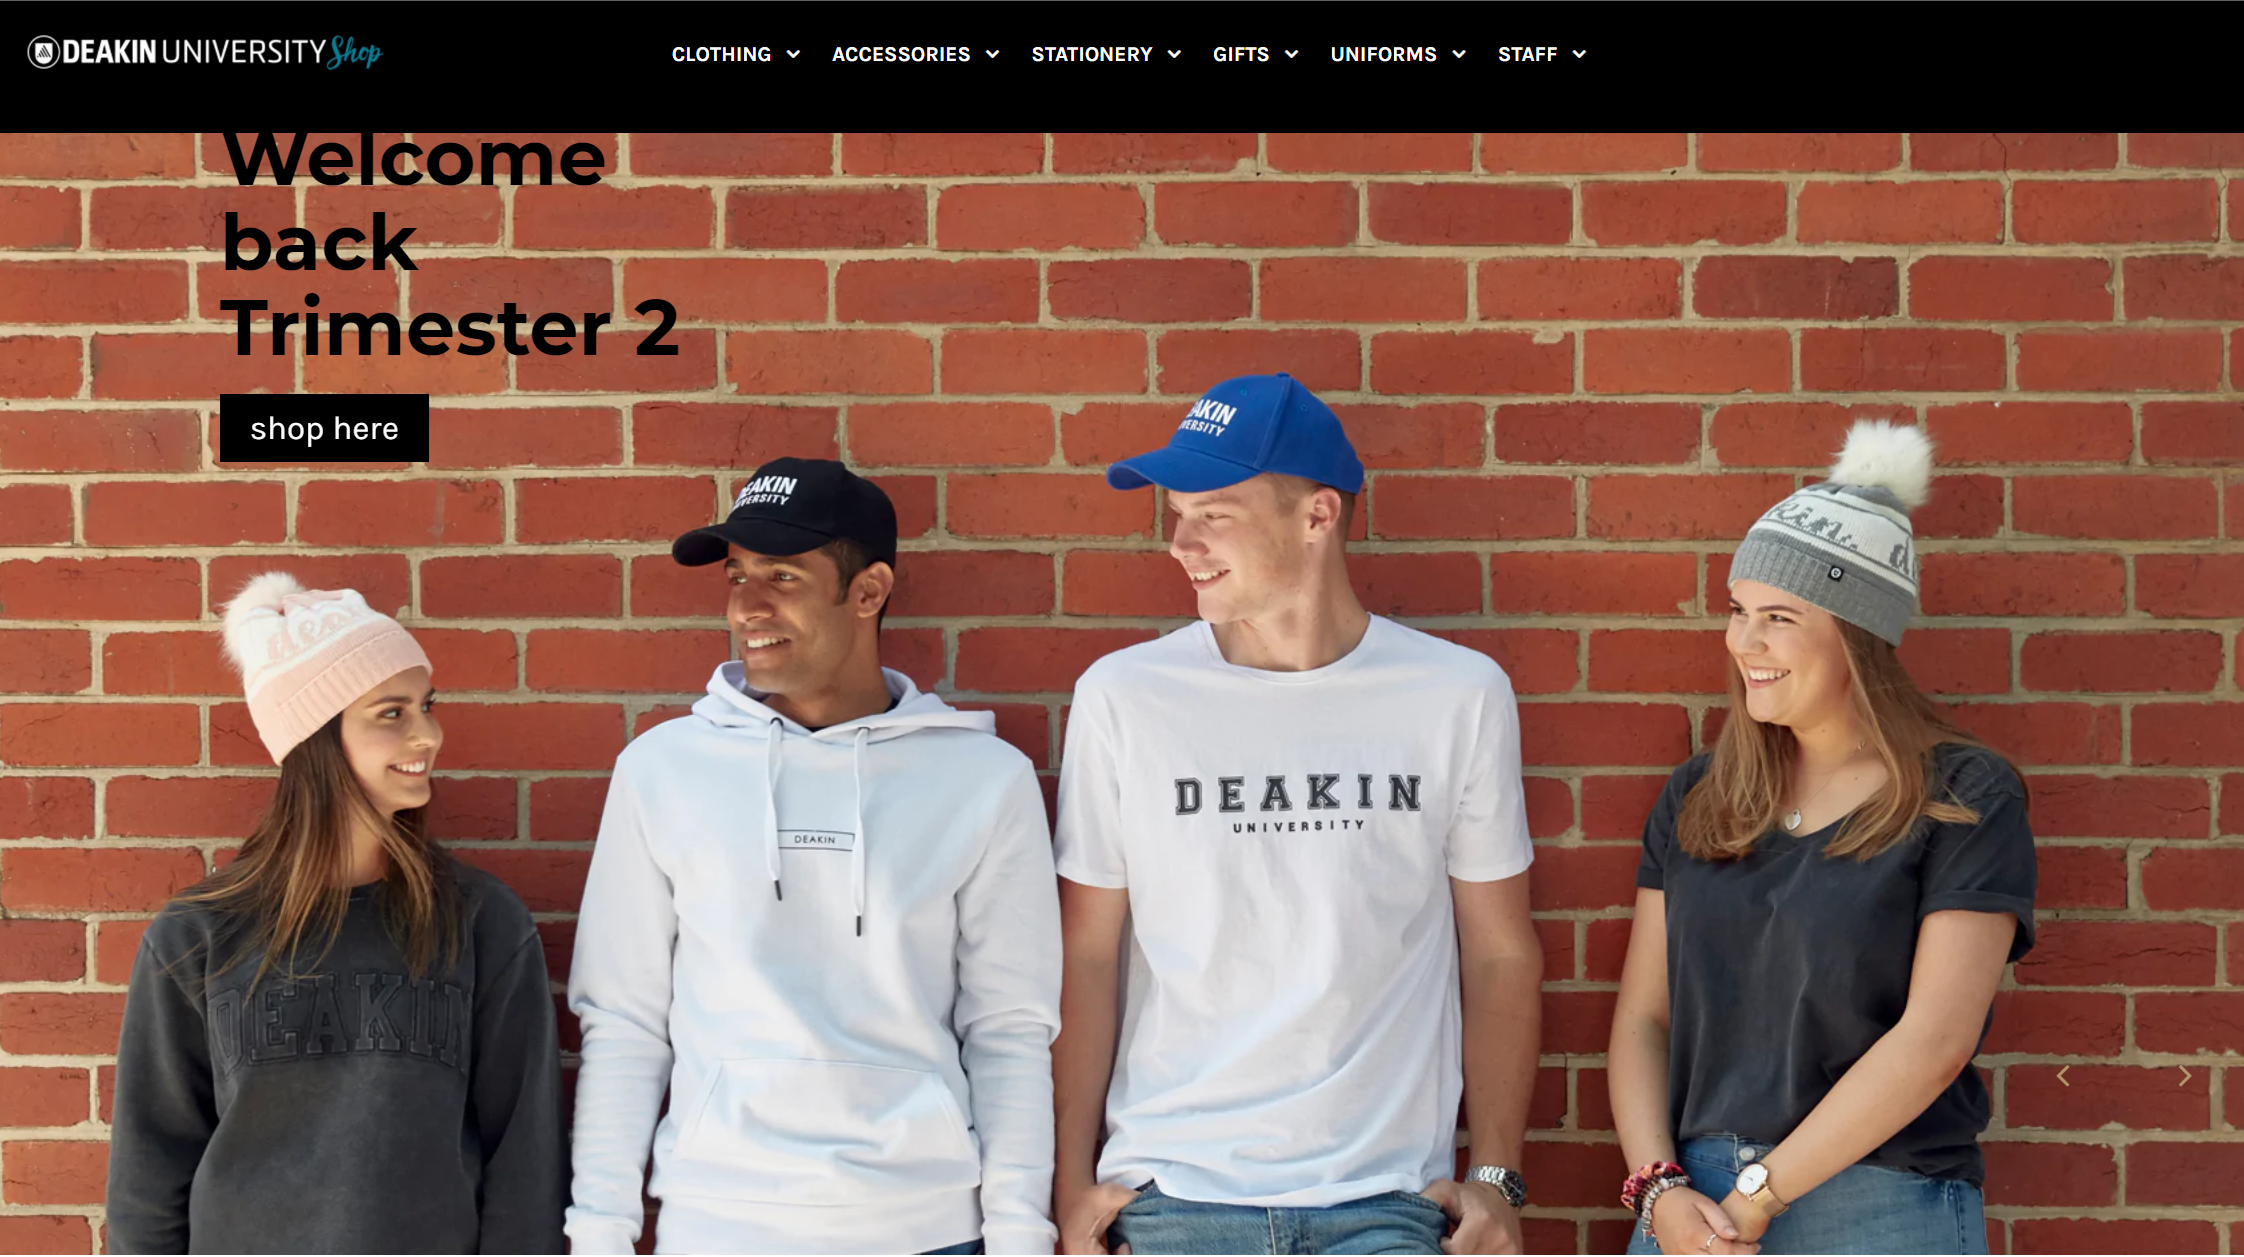 Deakin University merchandise store homepage